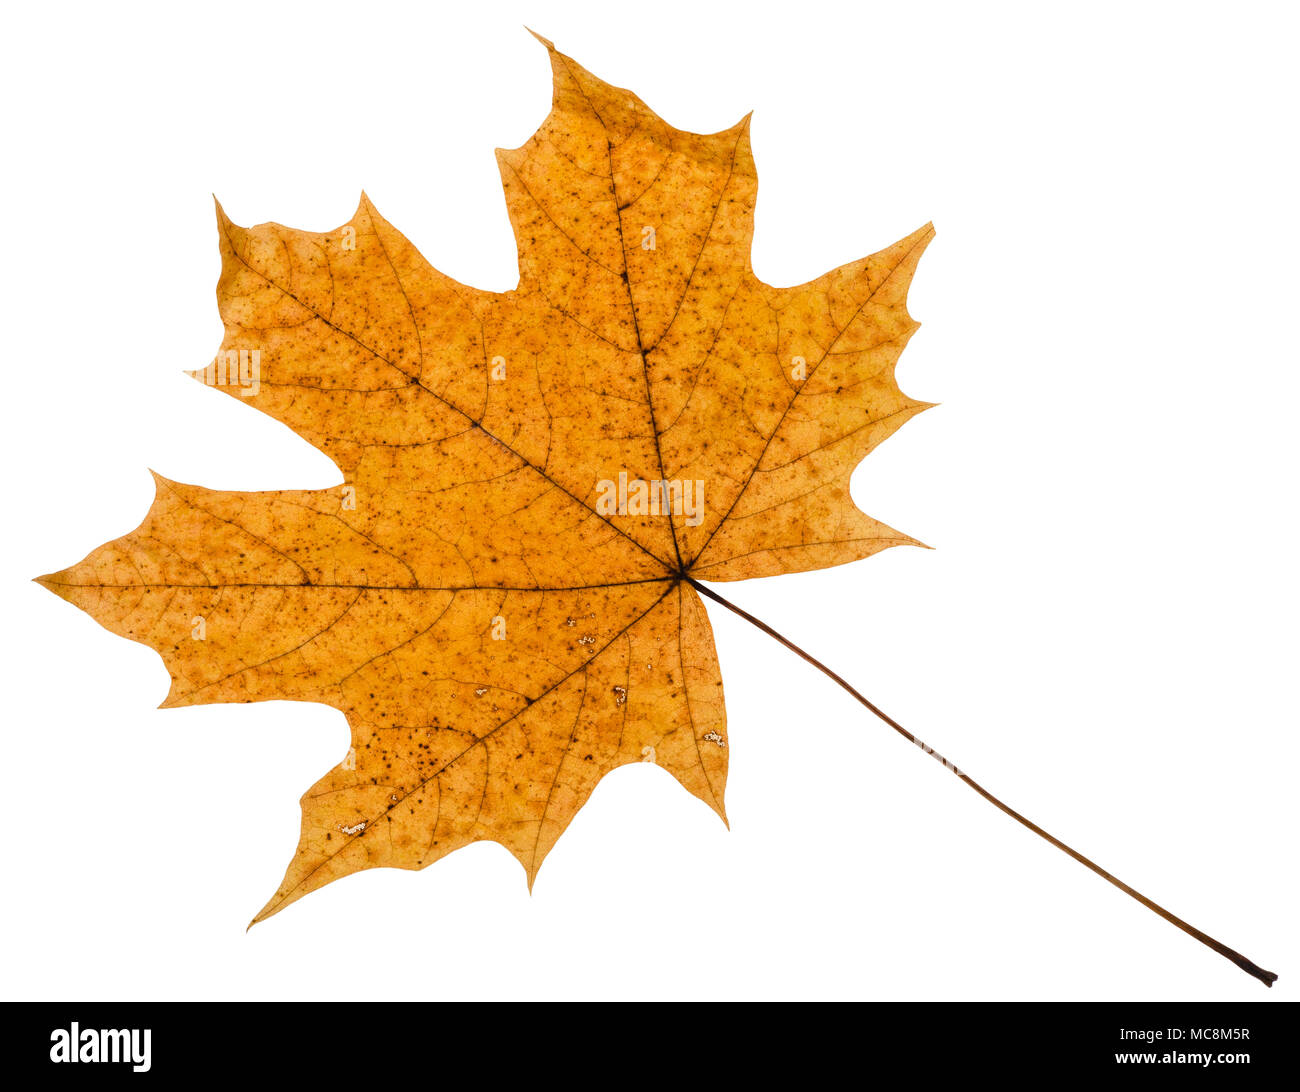 yellow autumn leaf of maple tree isolated on white background Stock Photo